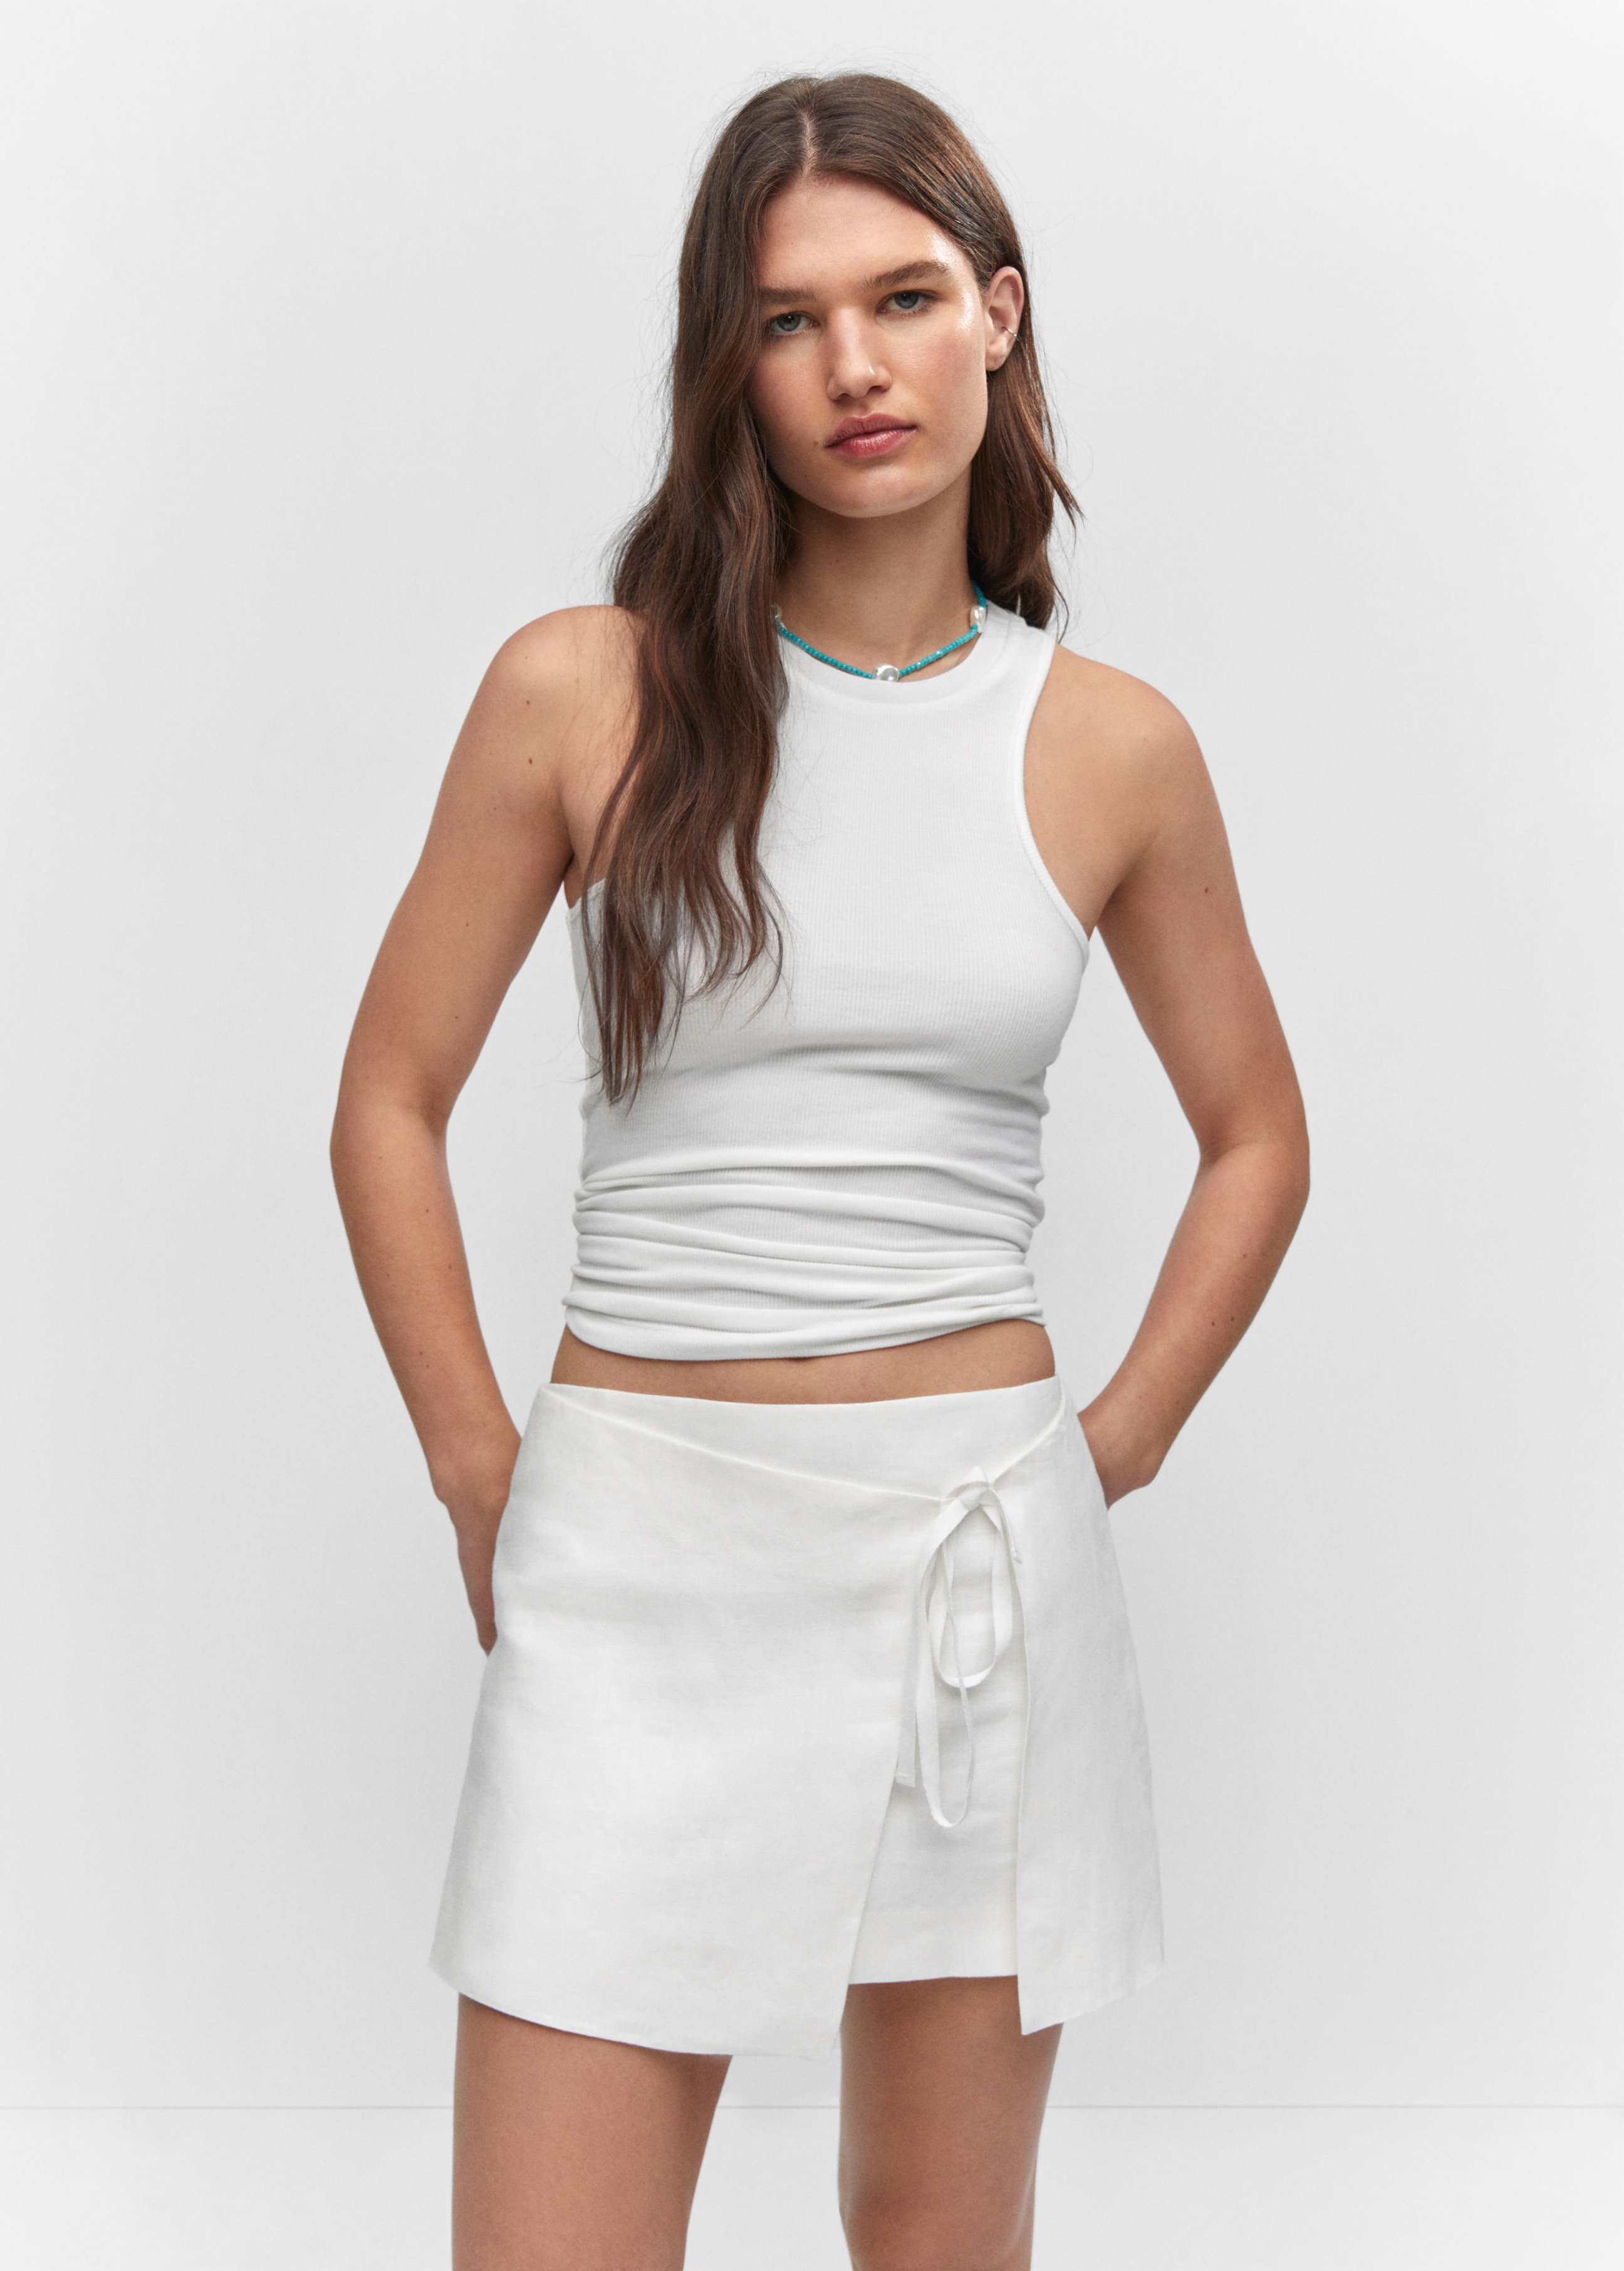 Linen-blend wrap skirt - Medium plane